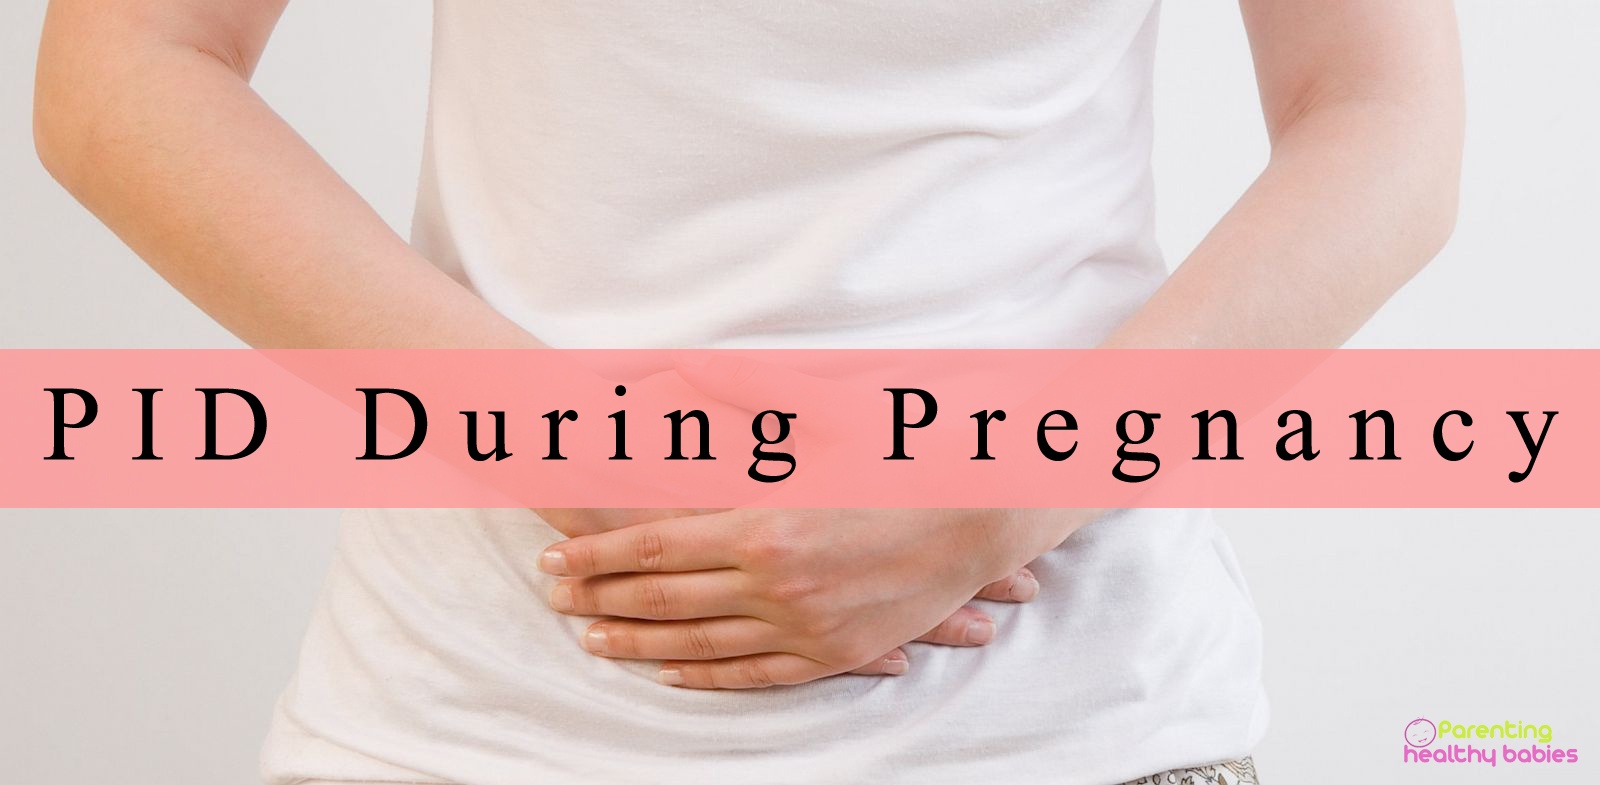 PID during pregnancy